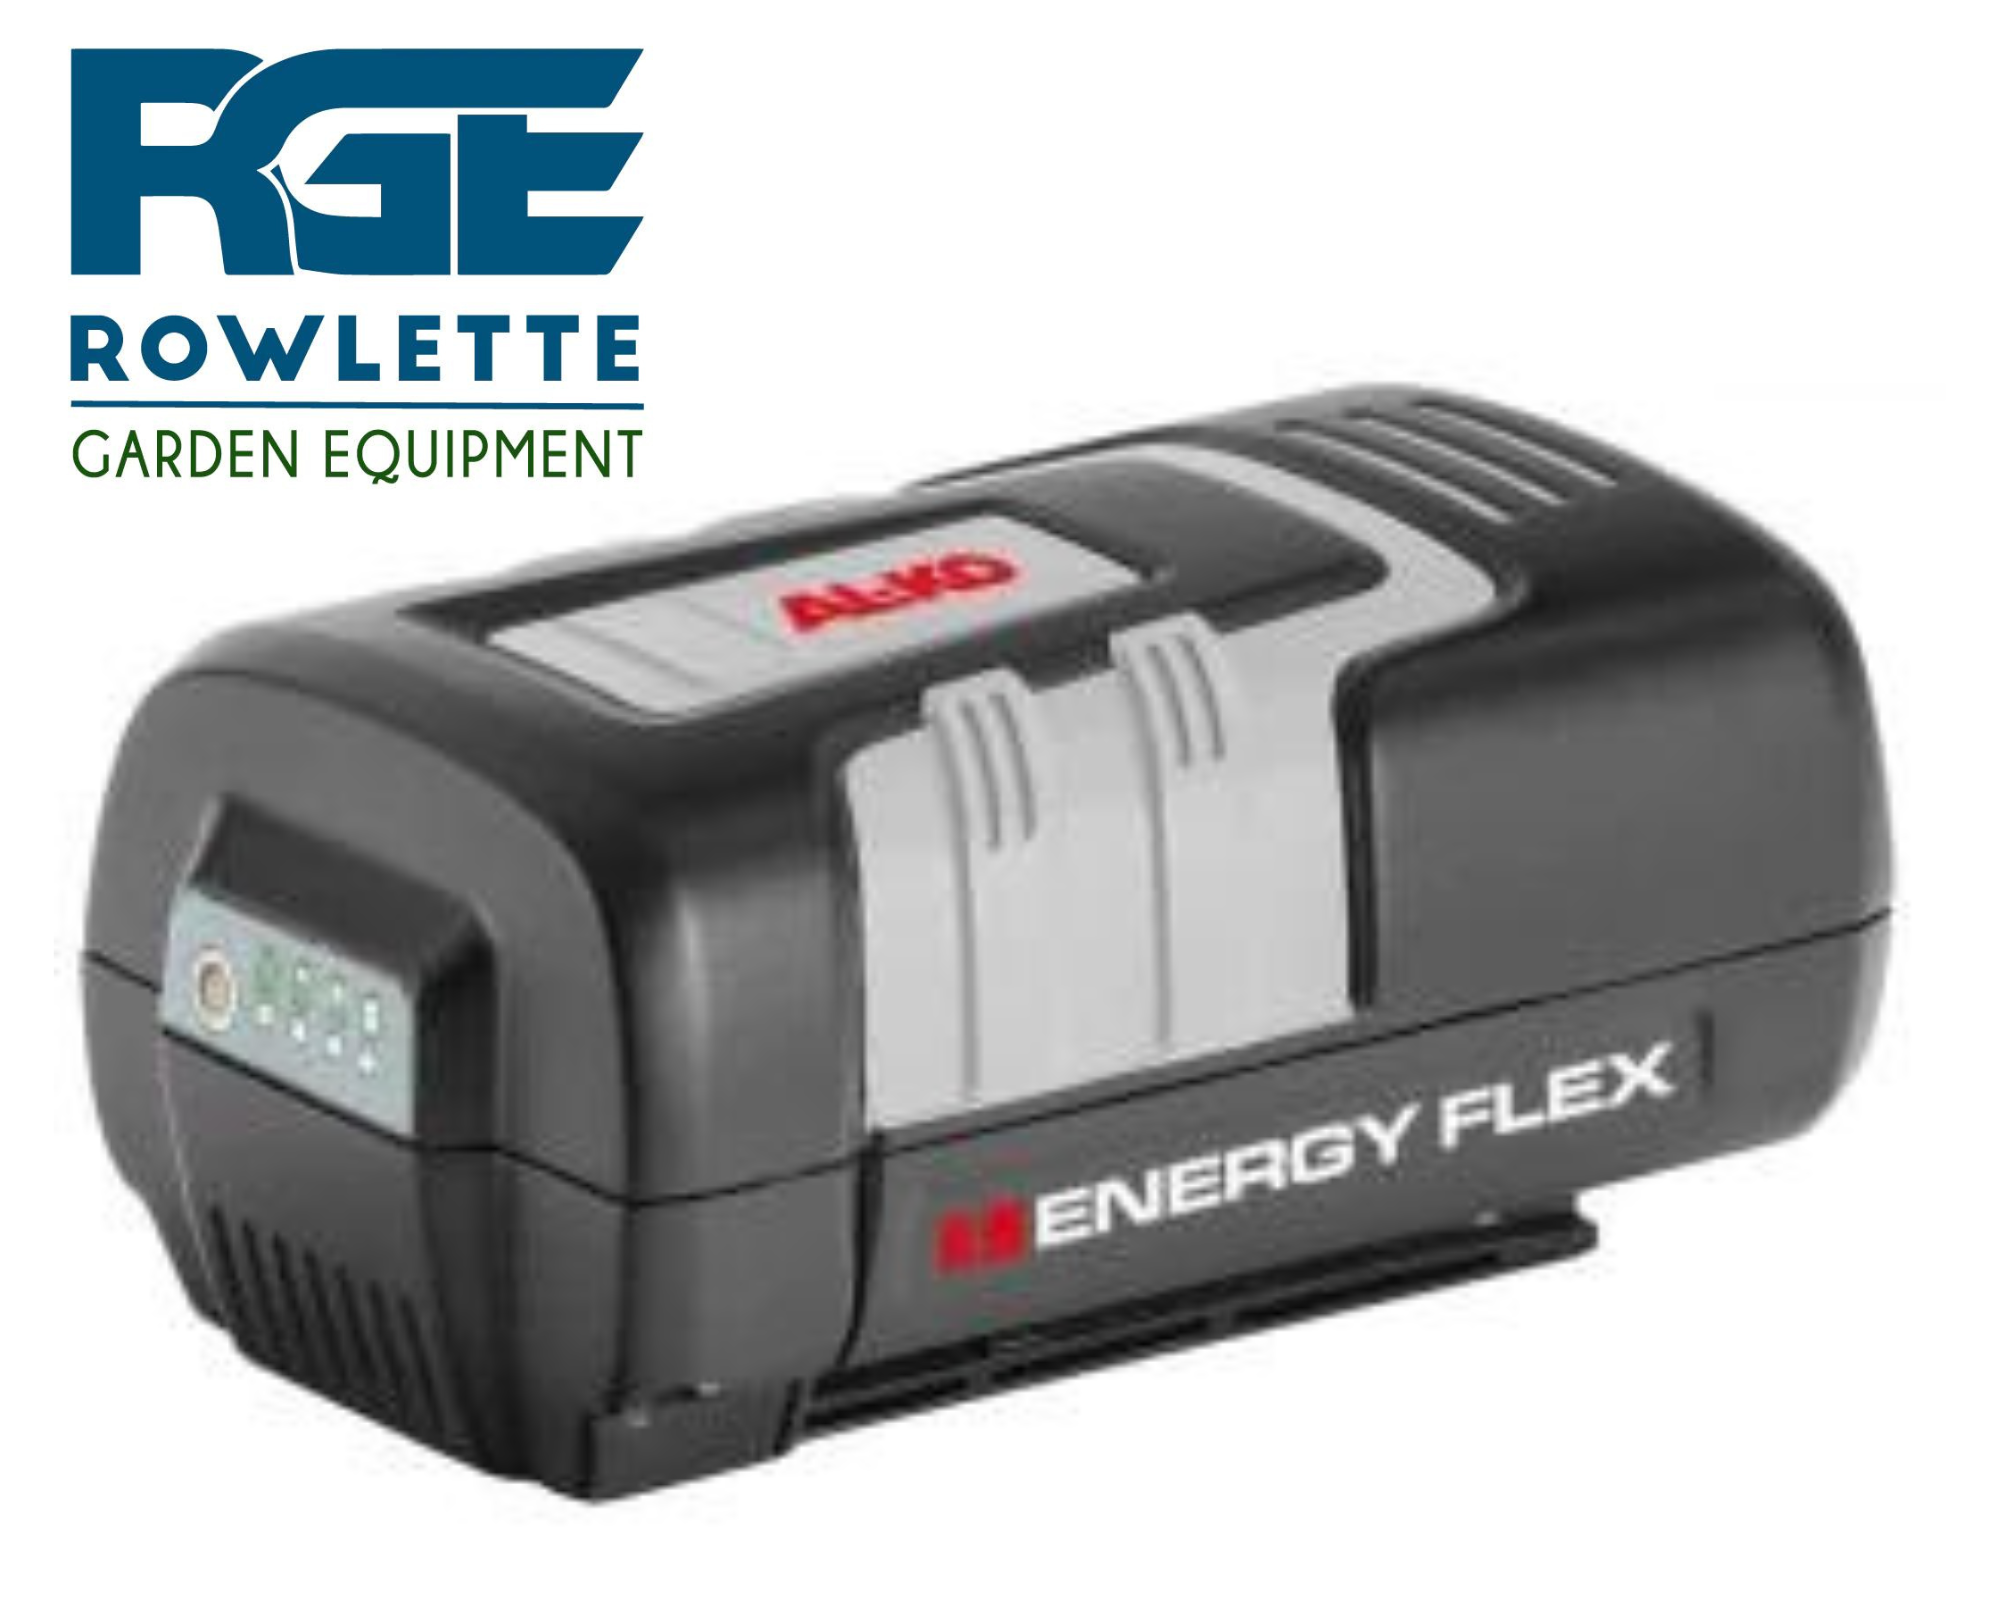 AL-KO Energy Flex B150 Li 40V / 4.0 Ah Battery